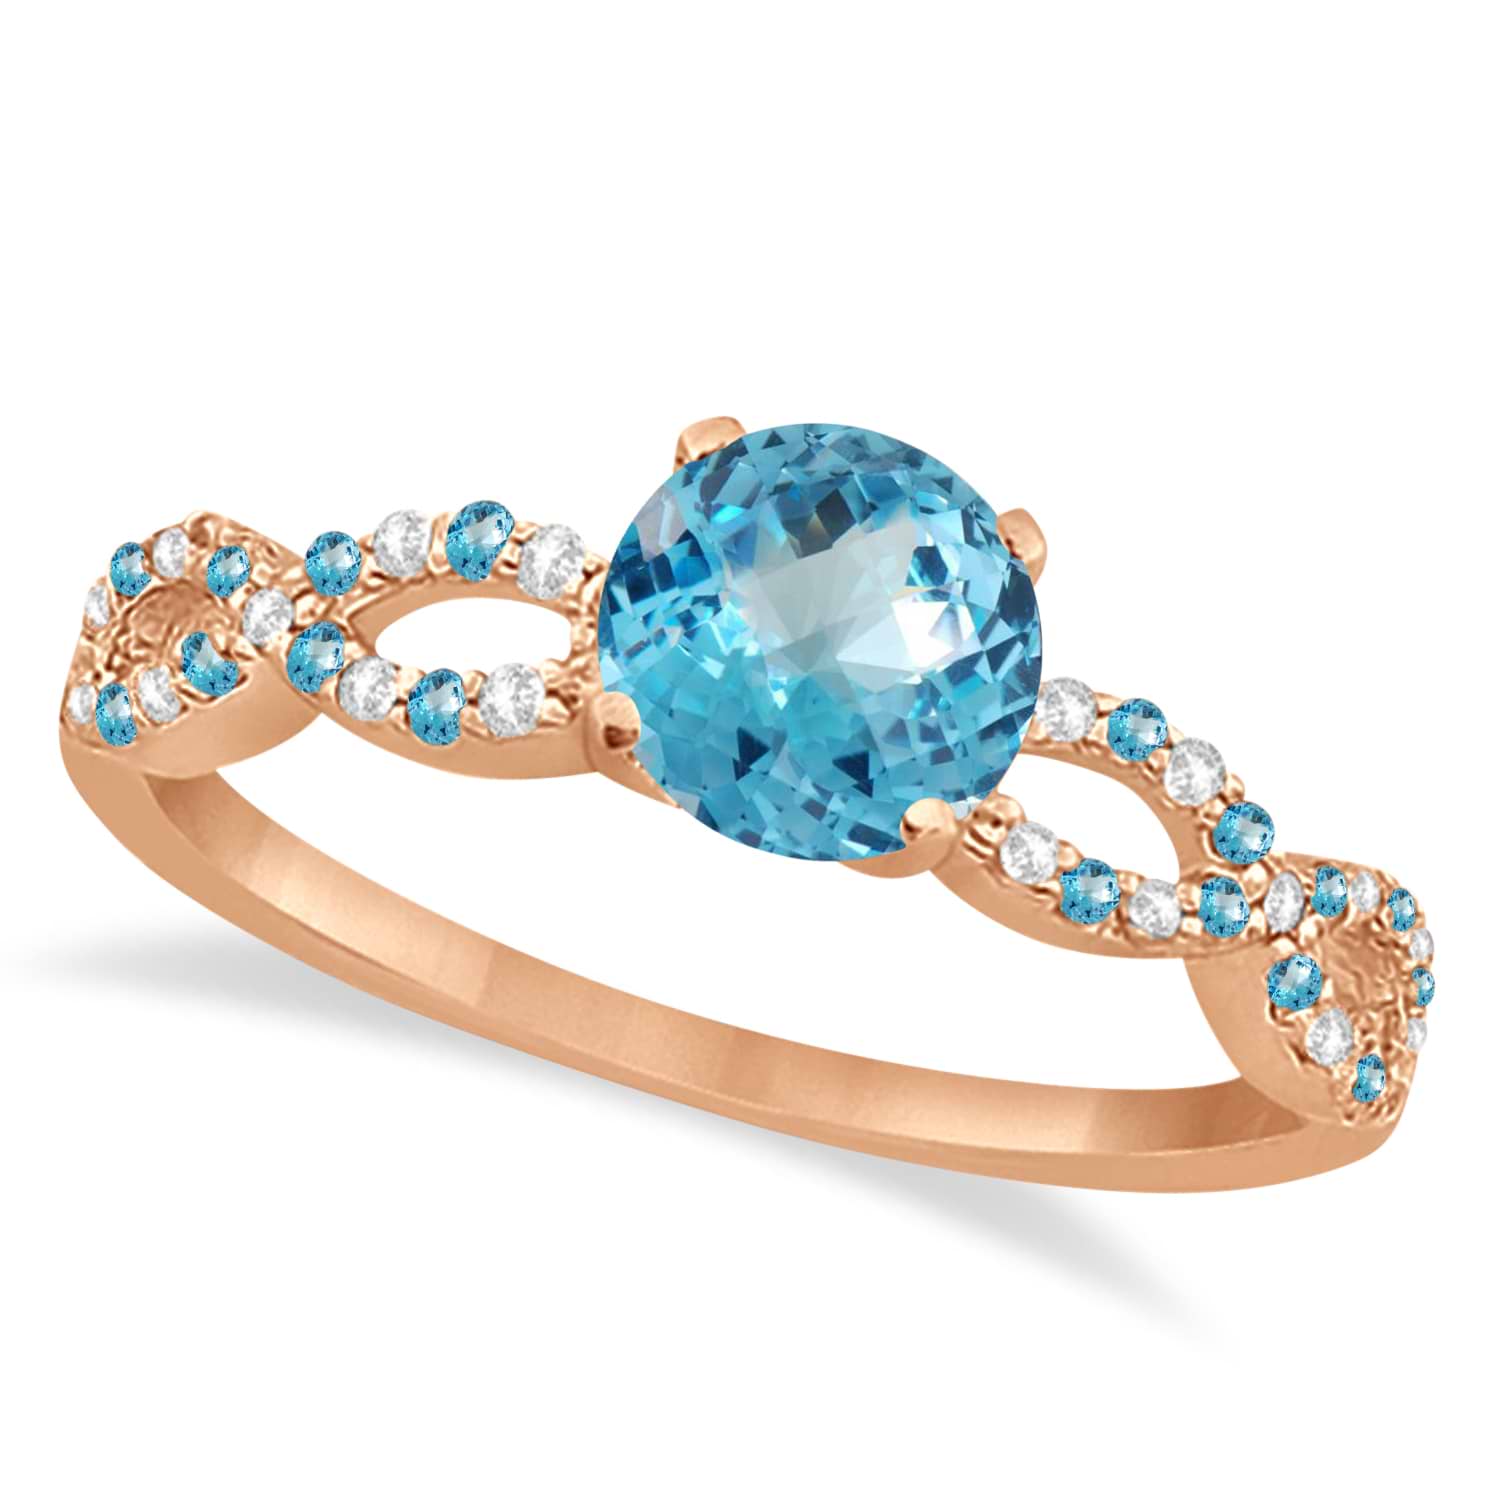 Diamond & Blue Topaz Infinity Engagement Ring 14K Rose Gold 1.45ct